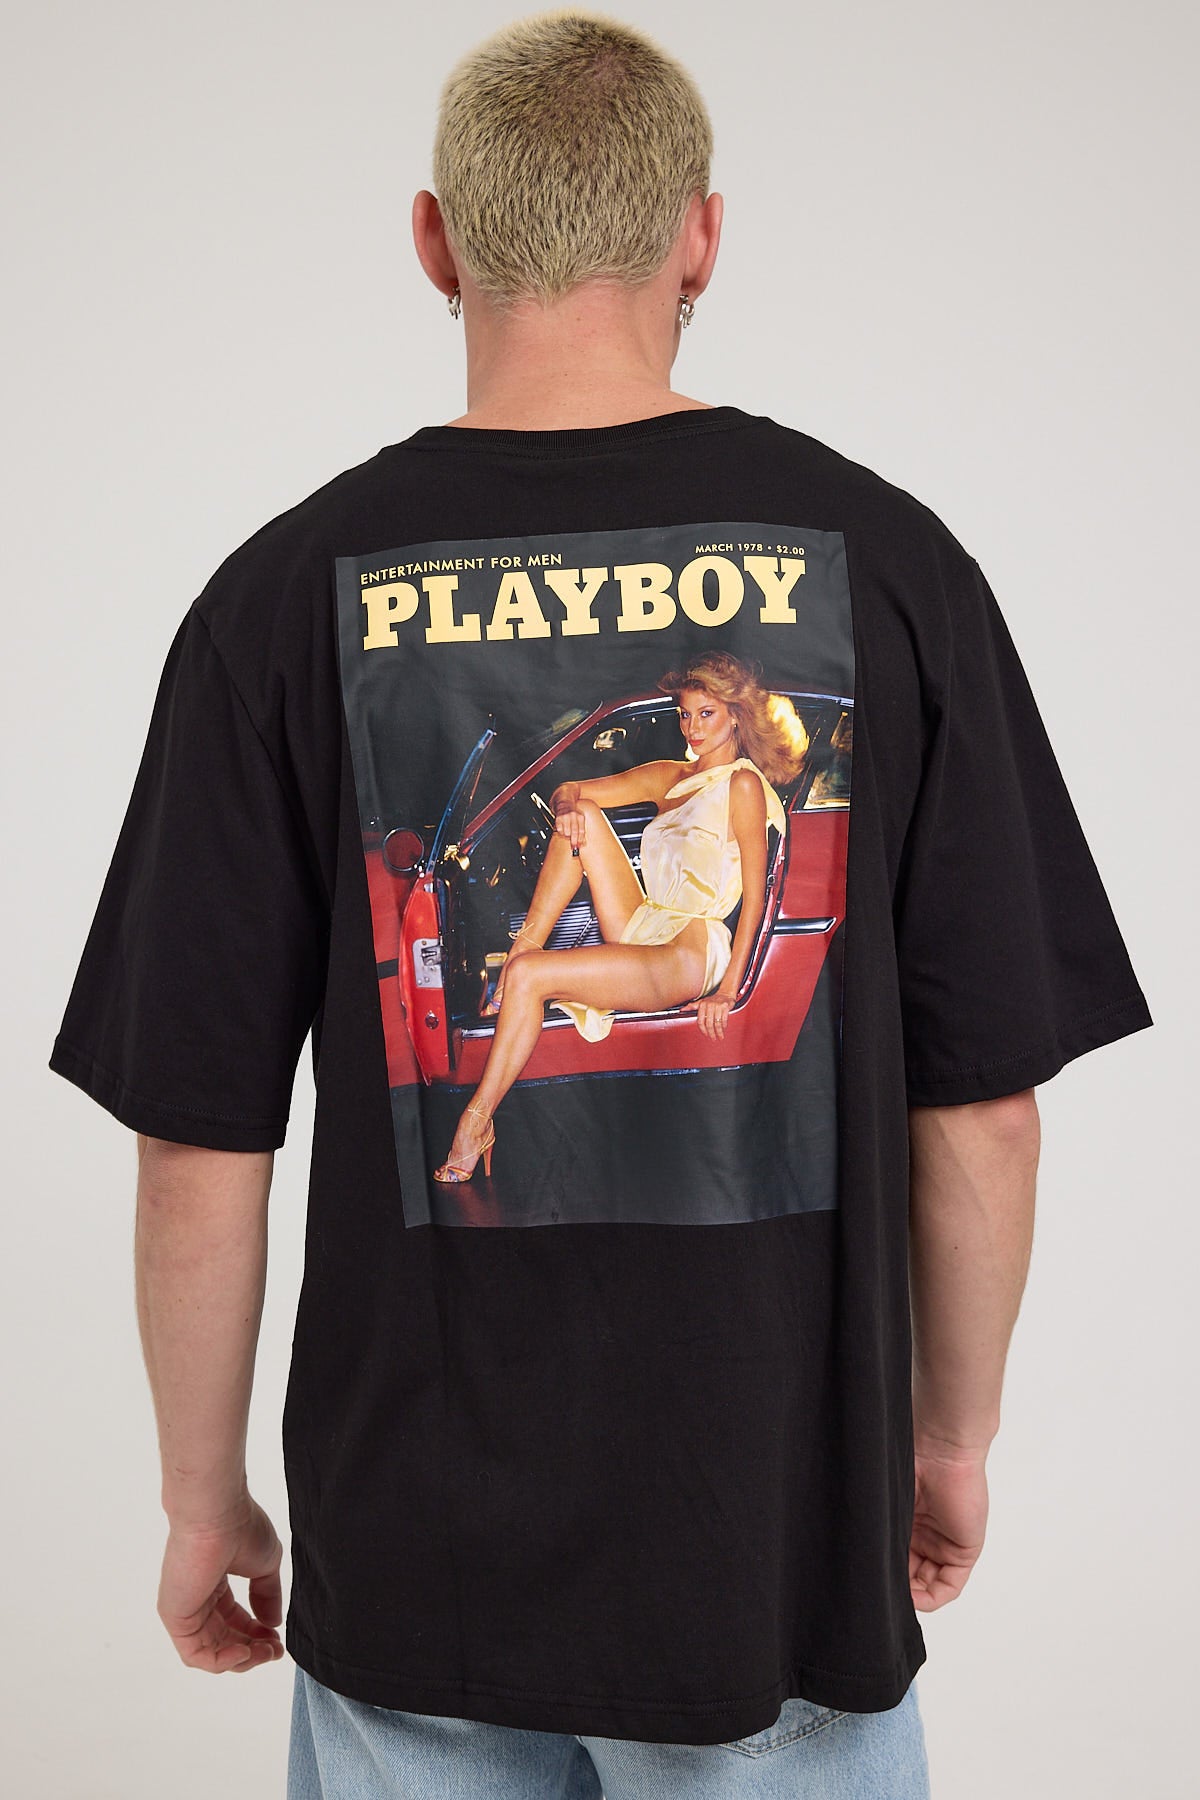 Playboy Playboy Cover Tee Black